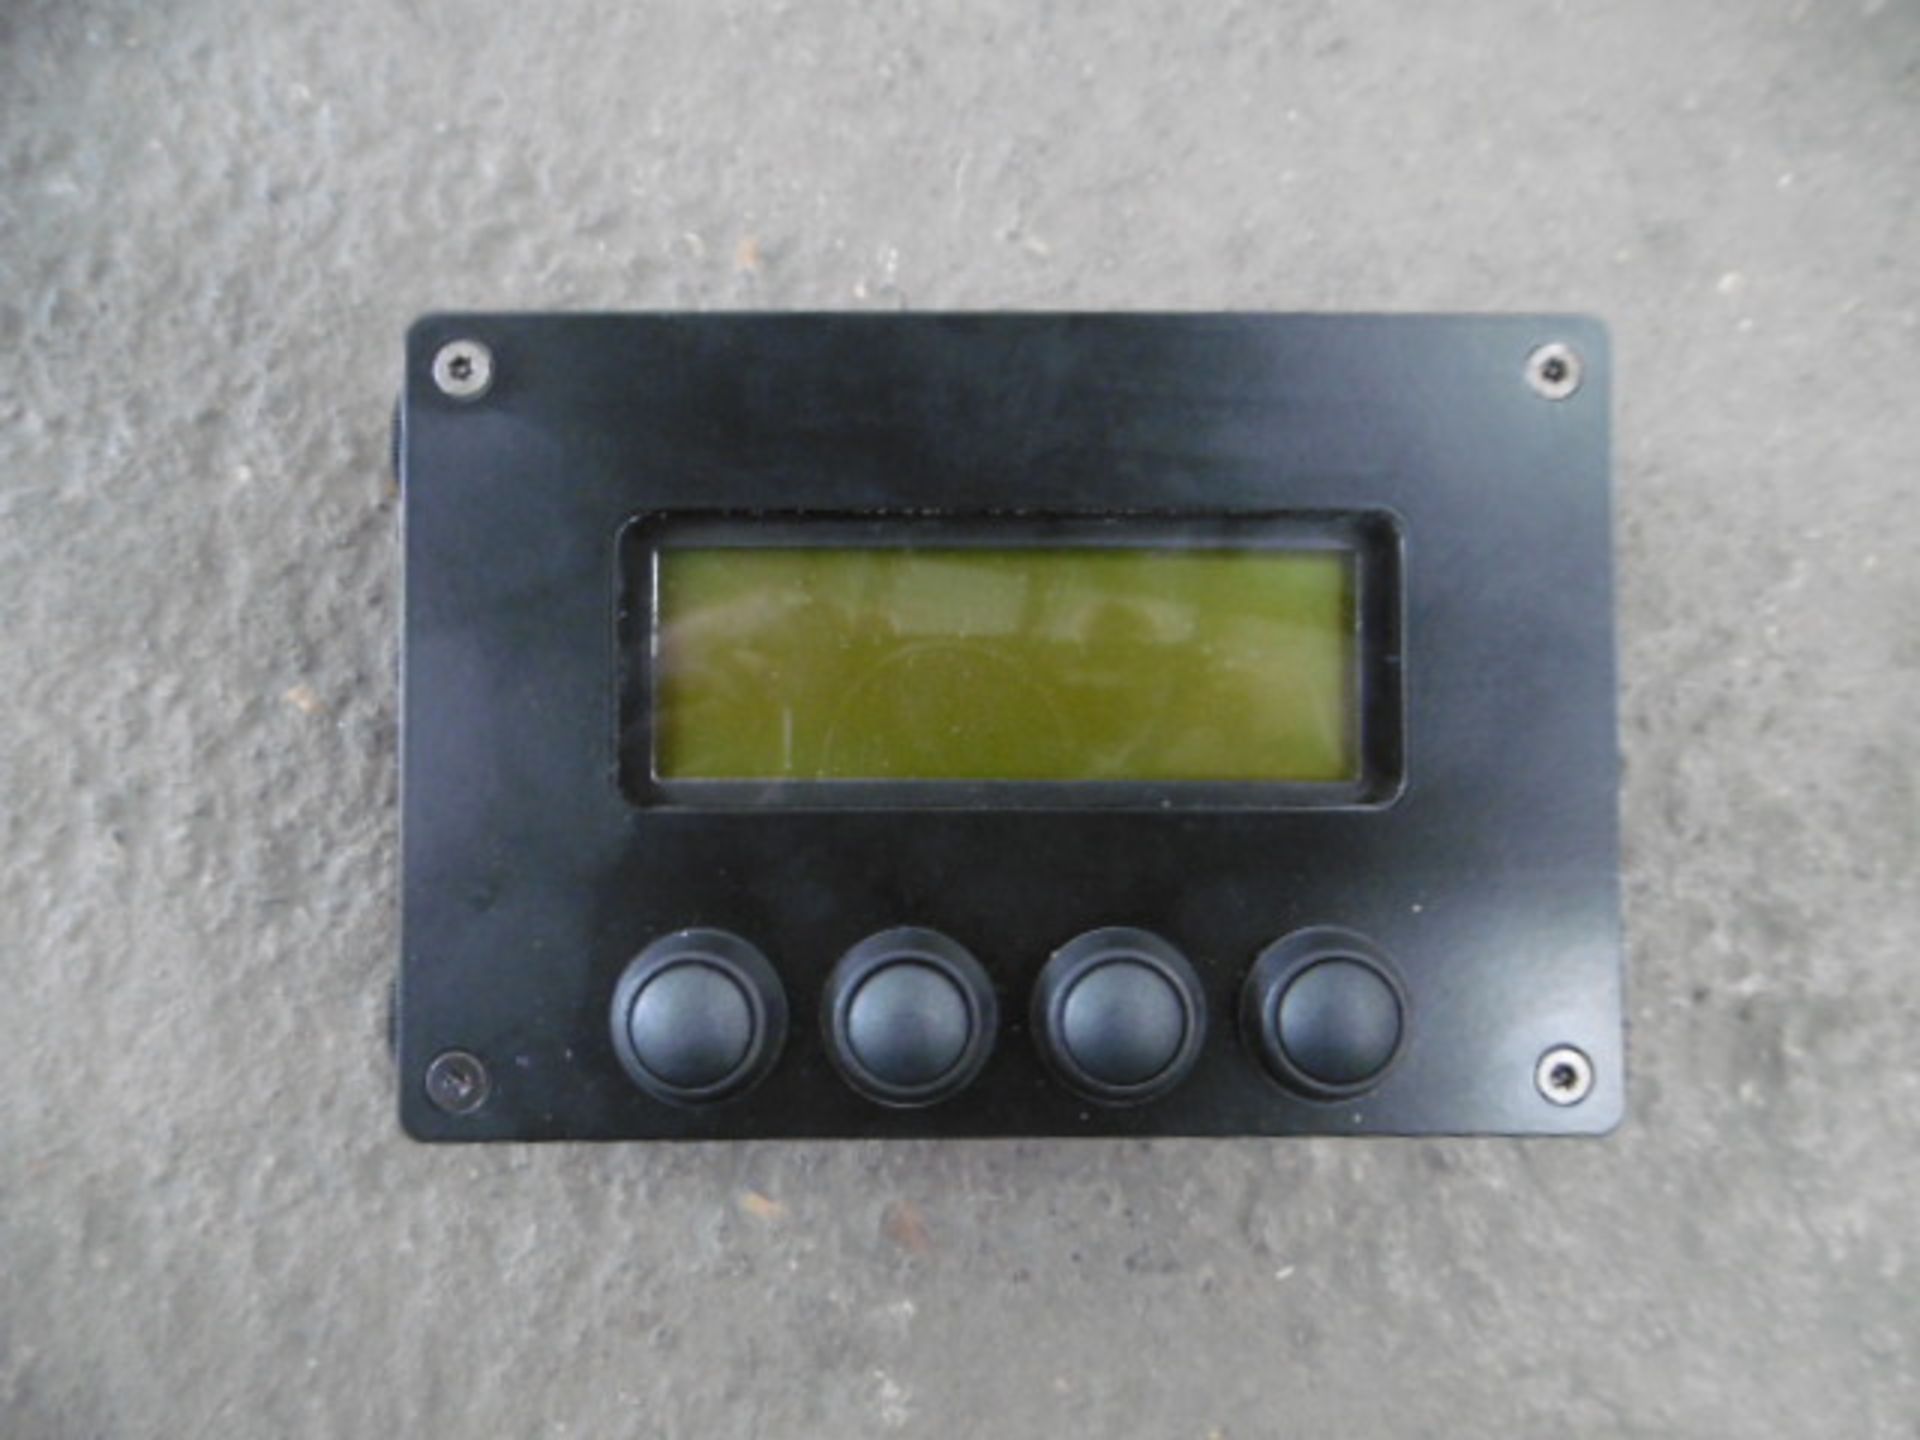 Radio Communication System in Secure Peli Case - Image 7 of 12